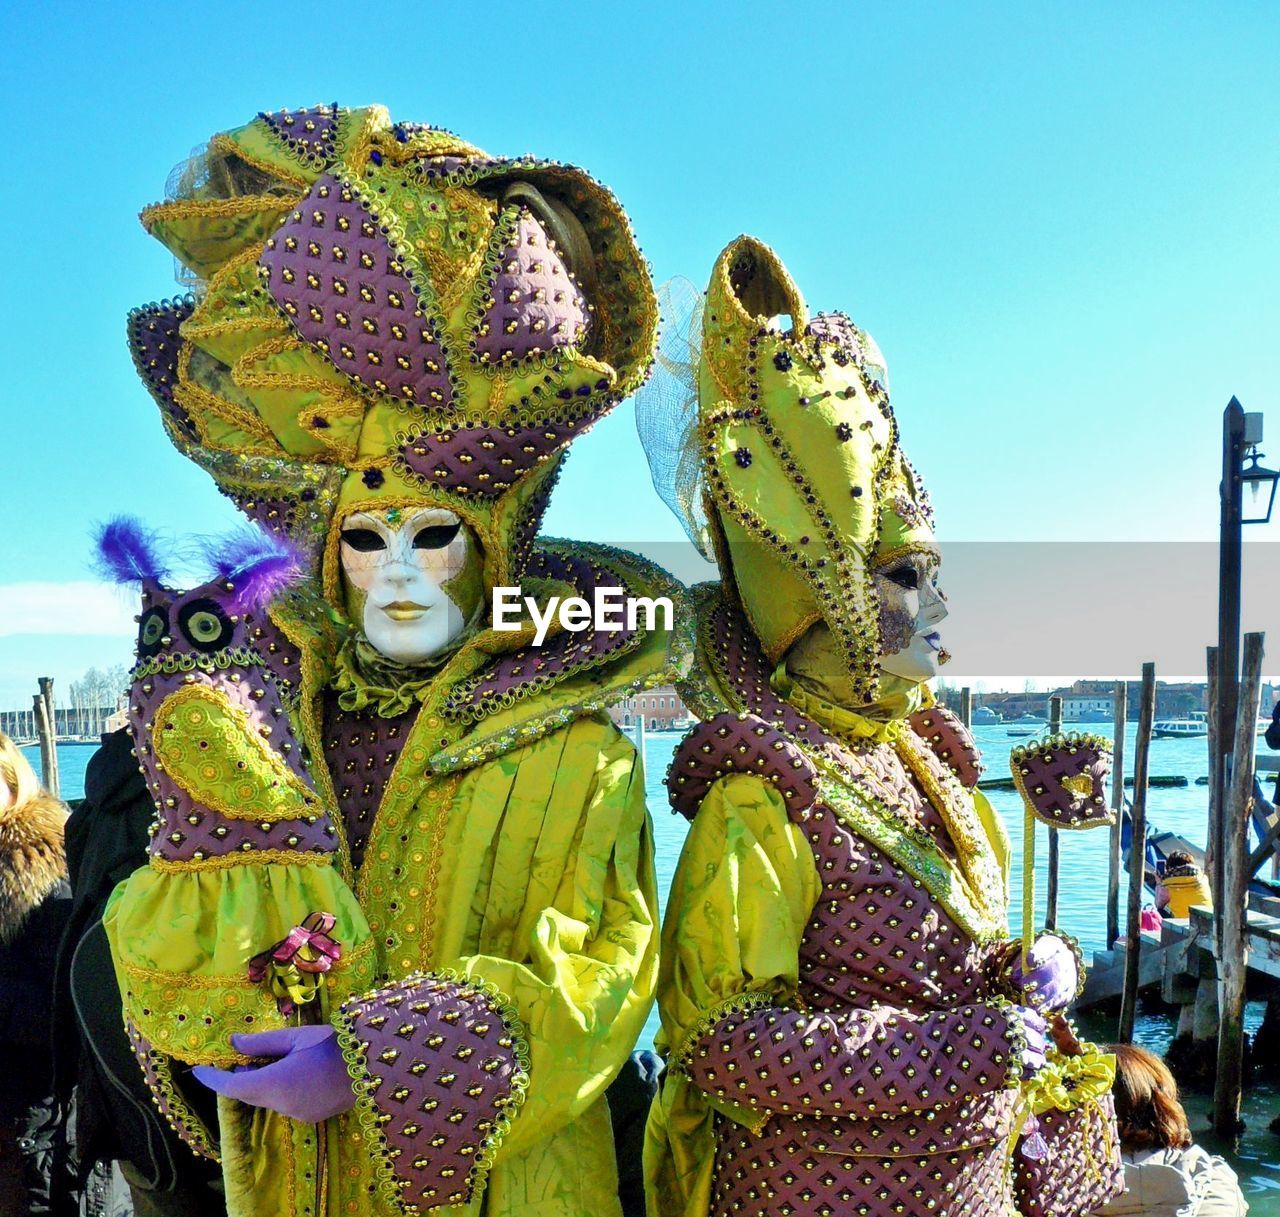 People wearing venetian mask at carnival